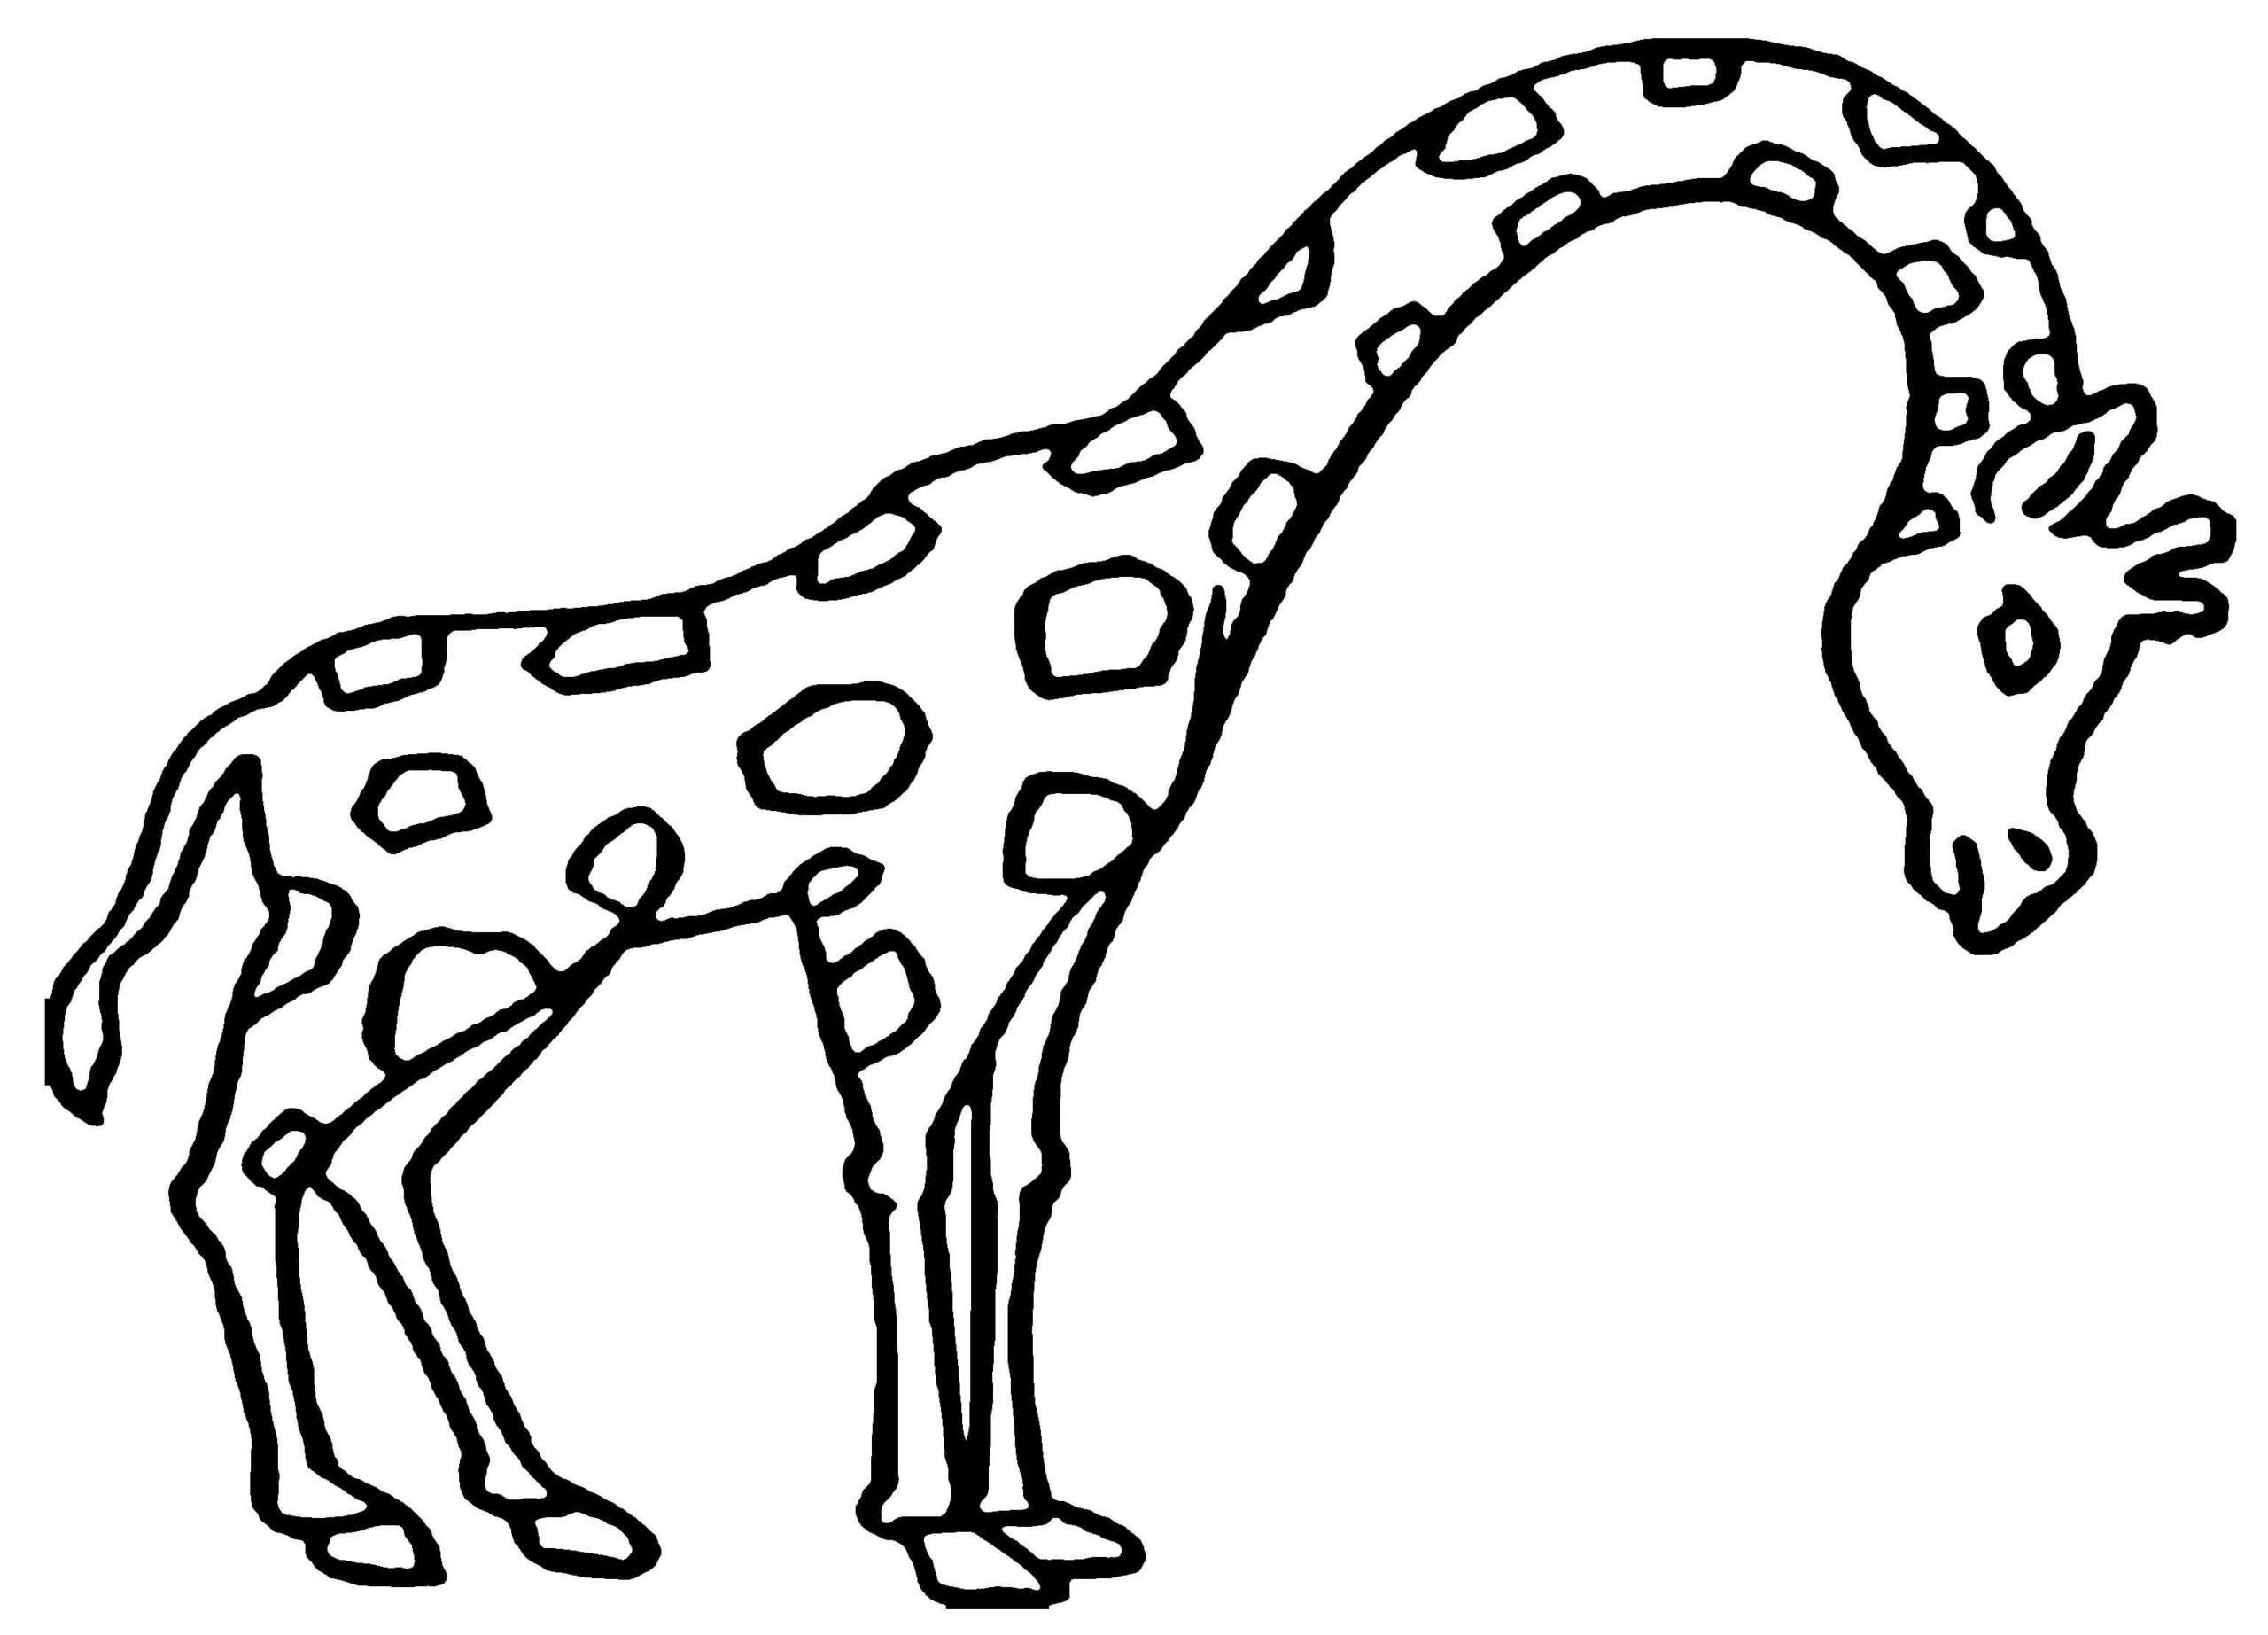 Giraffe of The Savanna